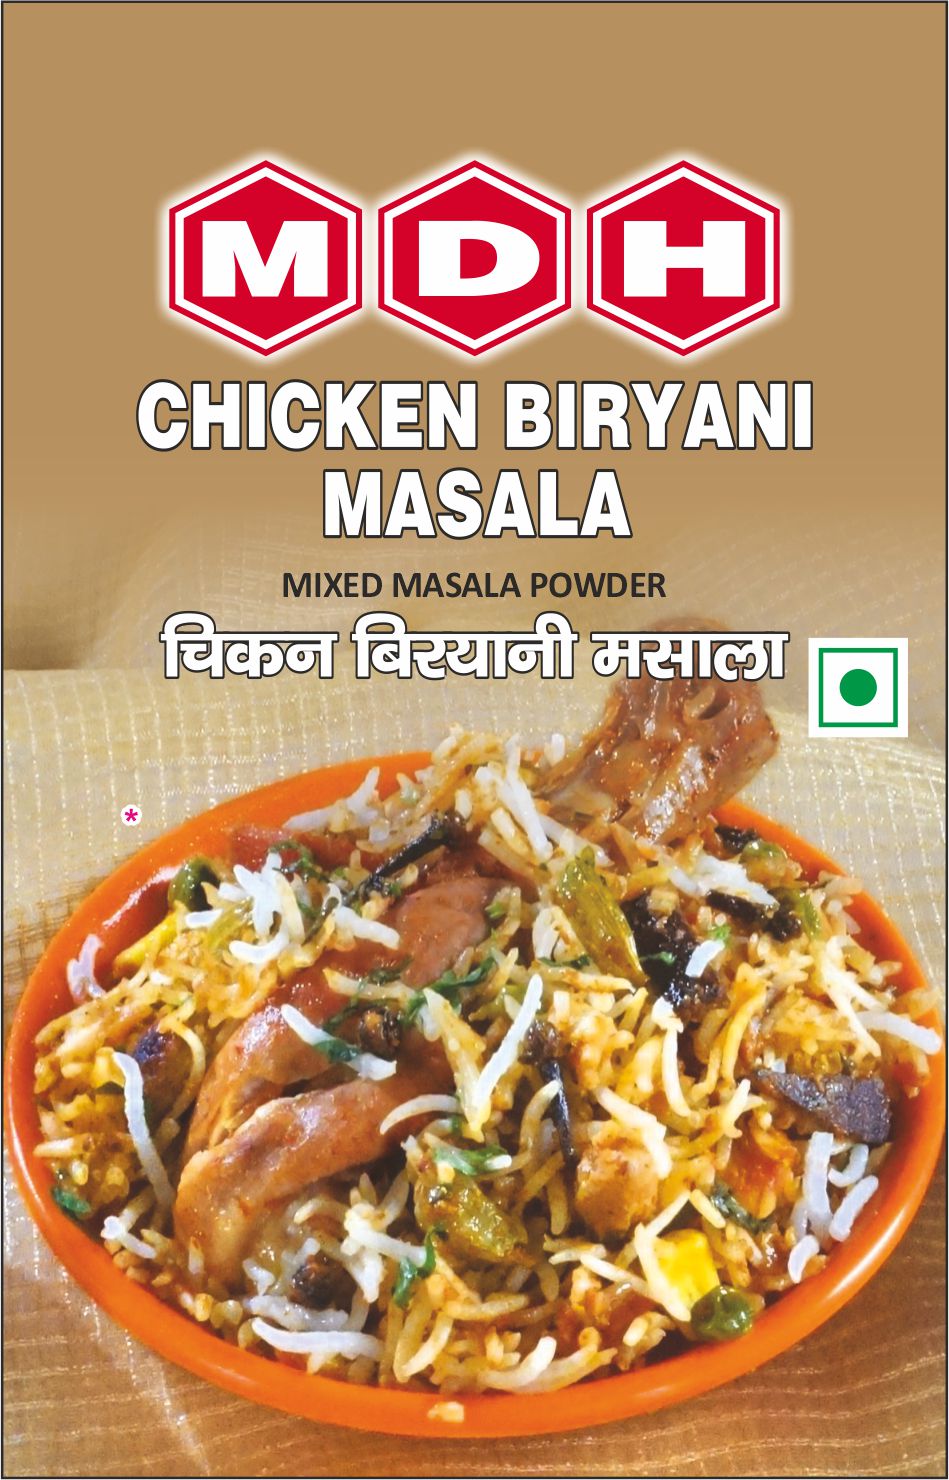 MDH-Chicken Biryani Masala-50g